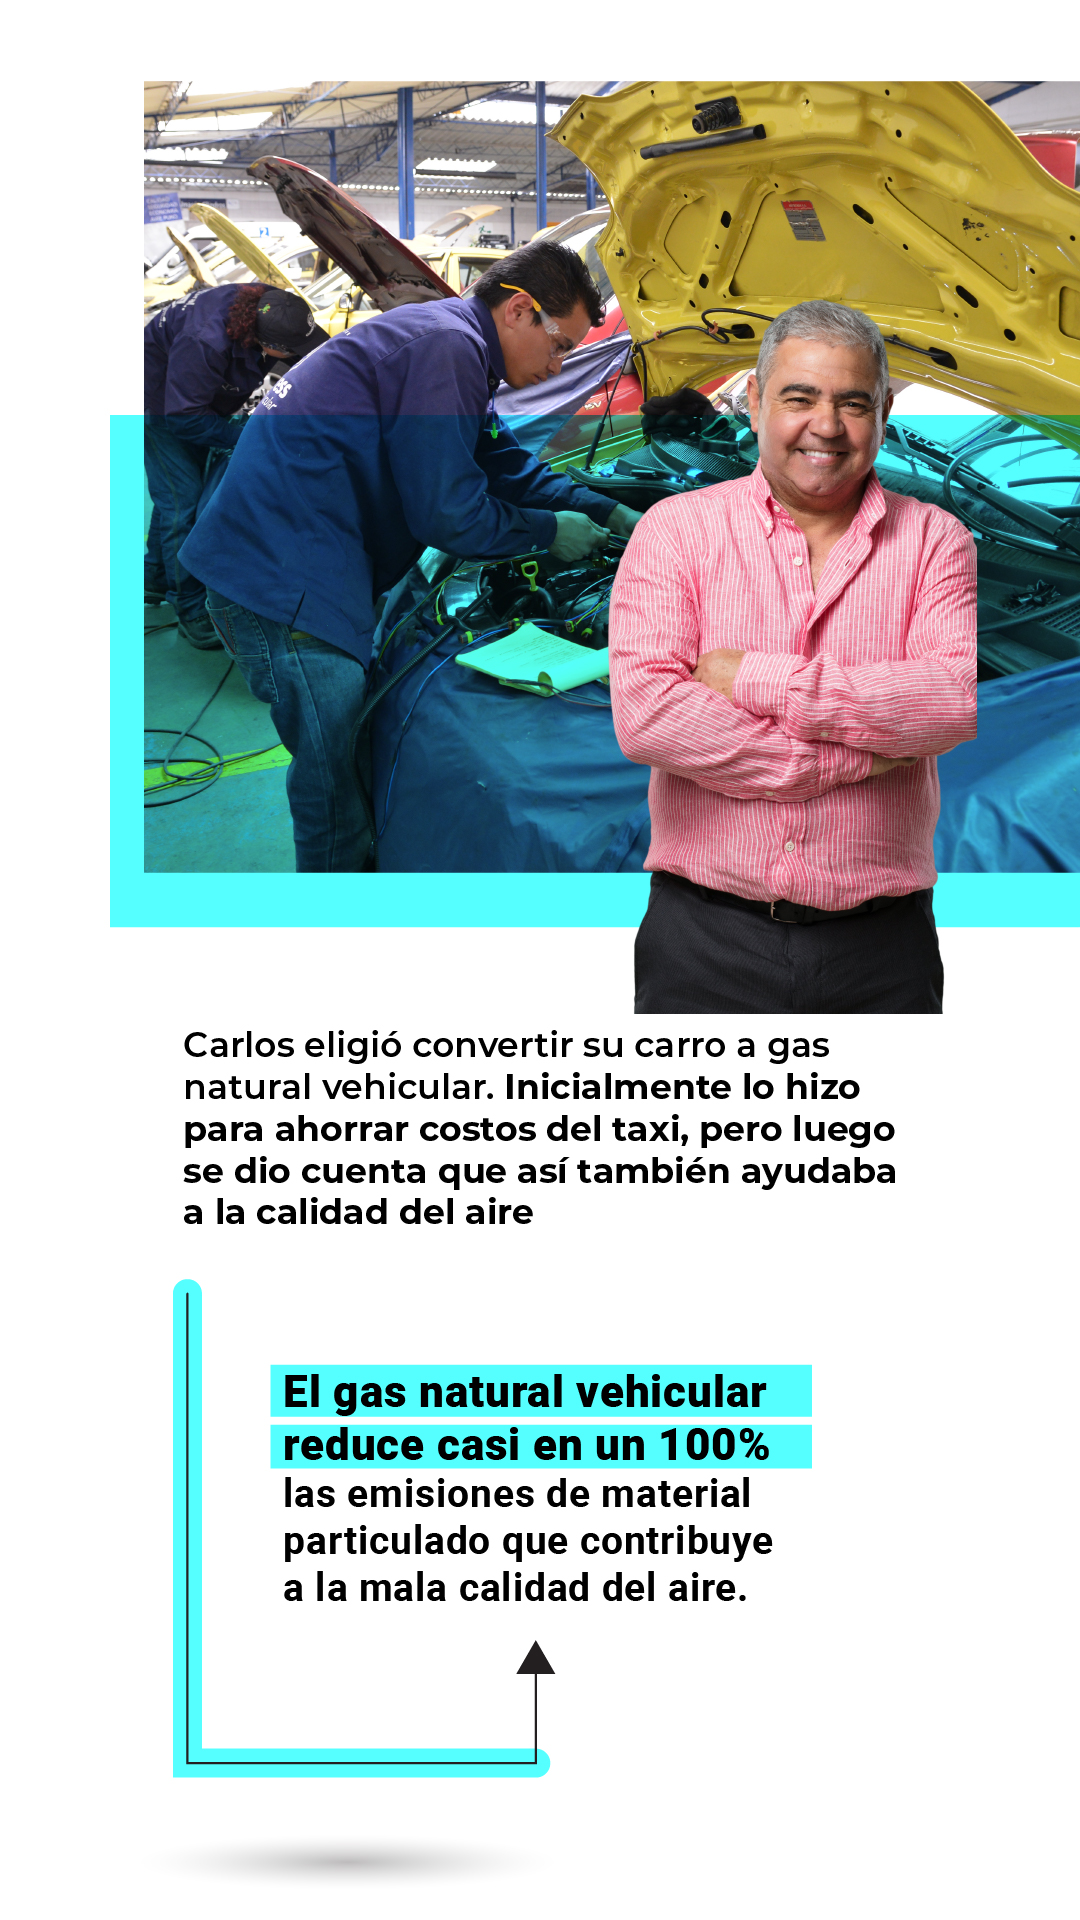 Carlos eligió convertir su carro a gas natural vehicular